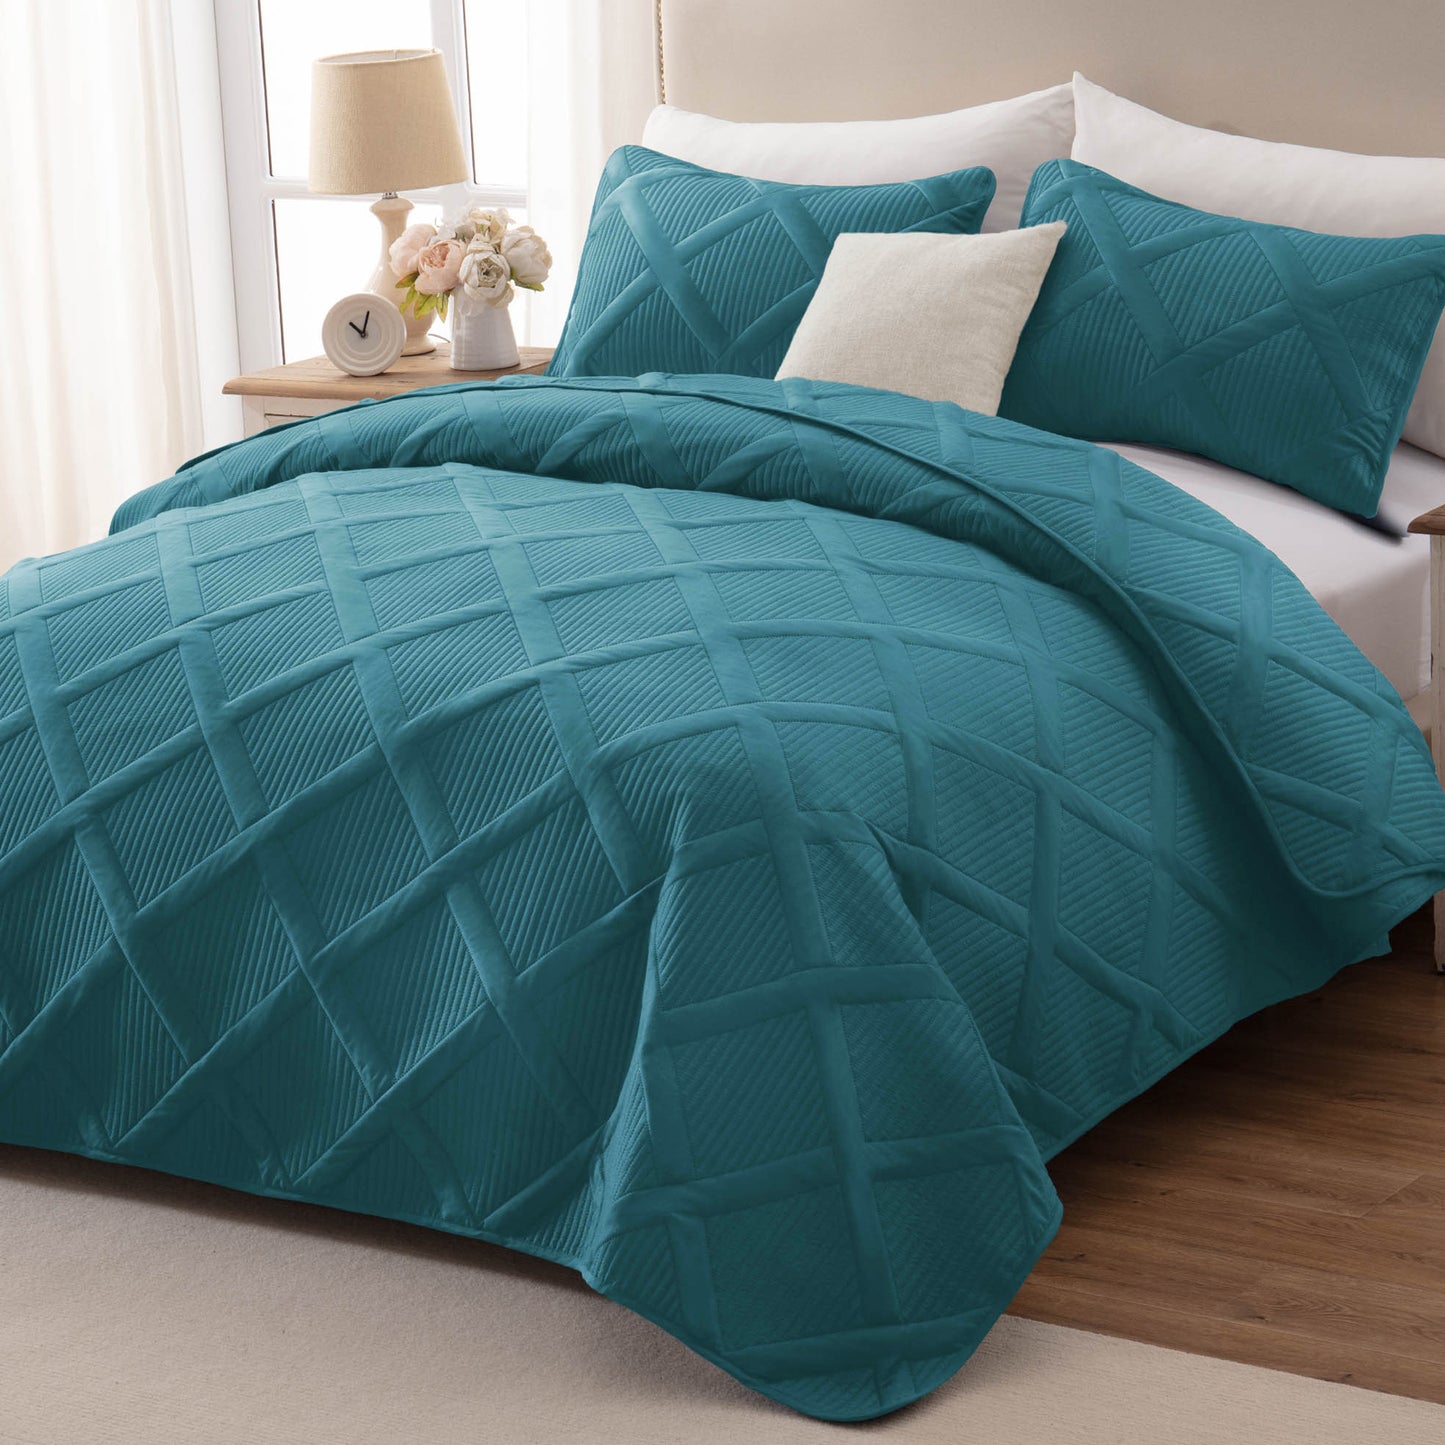 Exclusivo Mezcla Ultrasonic Twin/ Twin XL Quilt Set, Lightweight Bedspreads Modern Striped Coverlet with 1 Pillow Sham, Teal